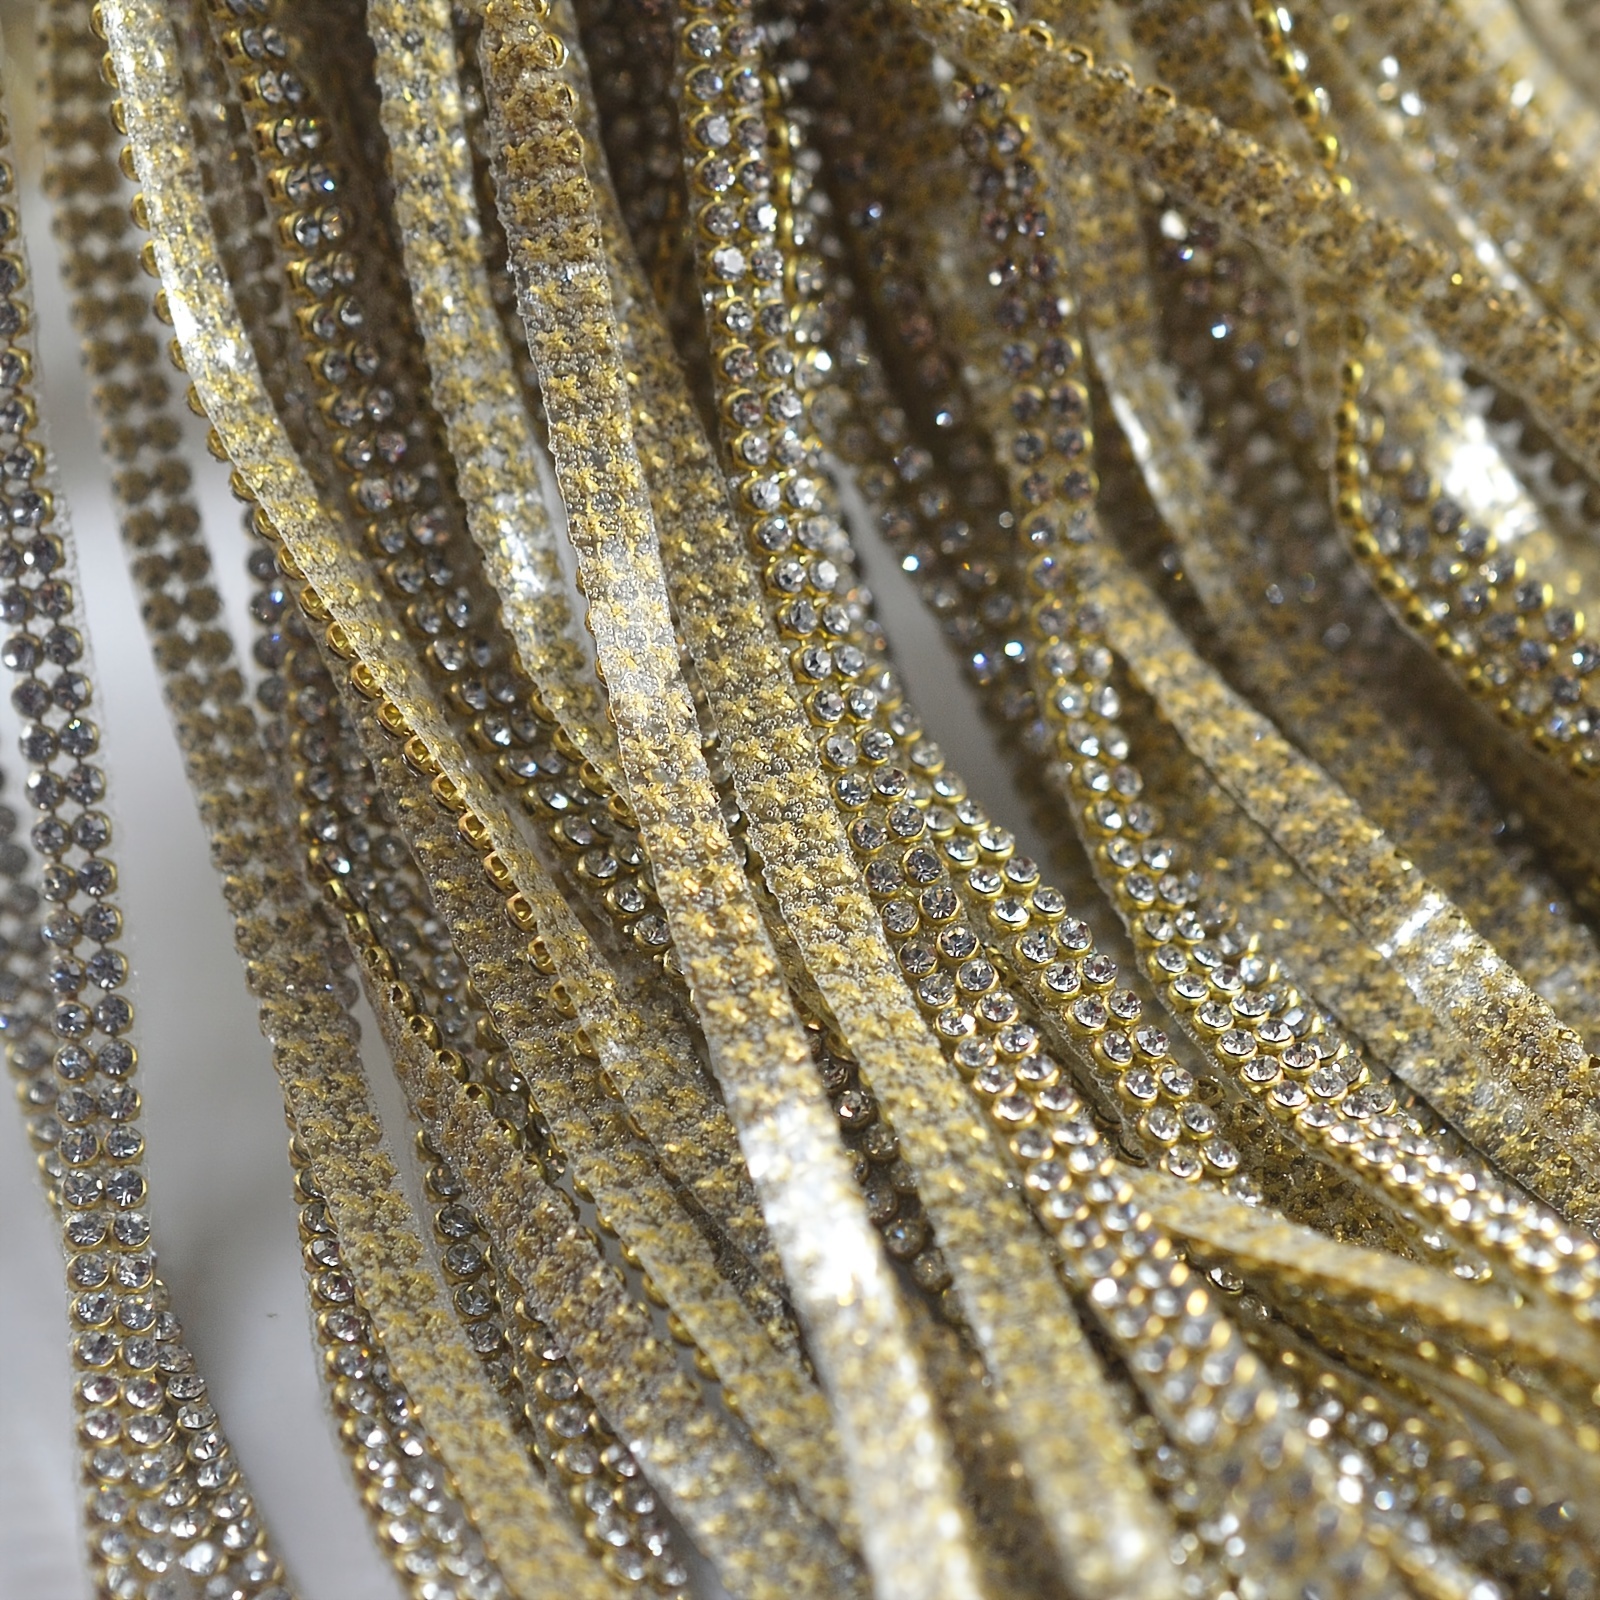 30cm/Lot Tassel Crystal Rhinestone Fringe Trim Bling Diamond Silver Crystal  Decorative Metal Chain Clothing Dress